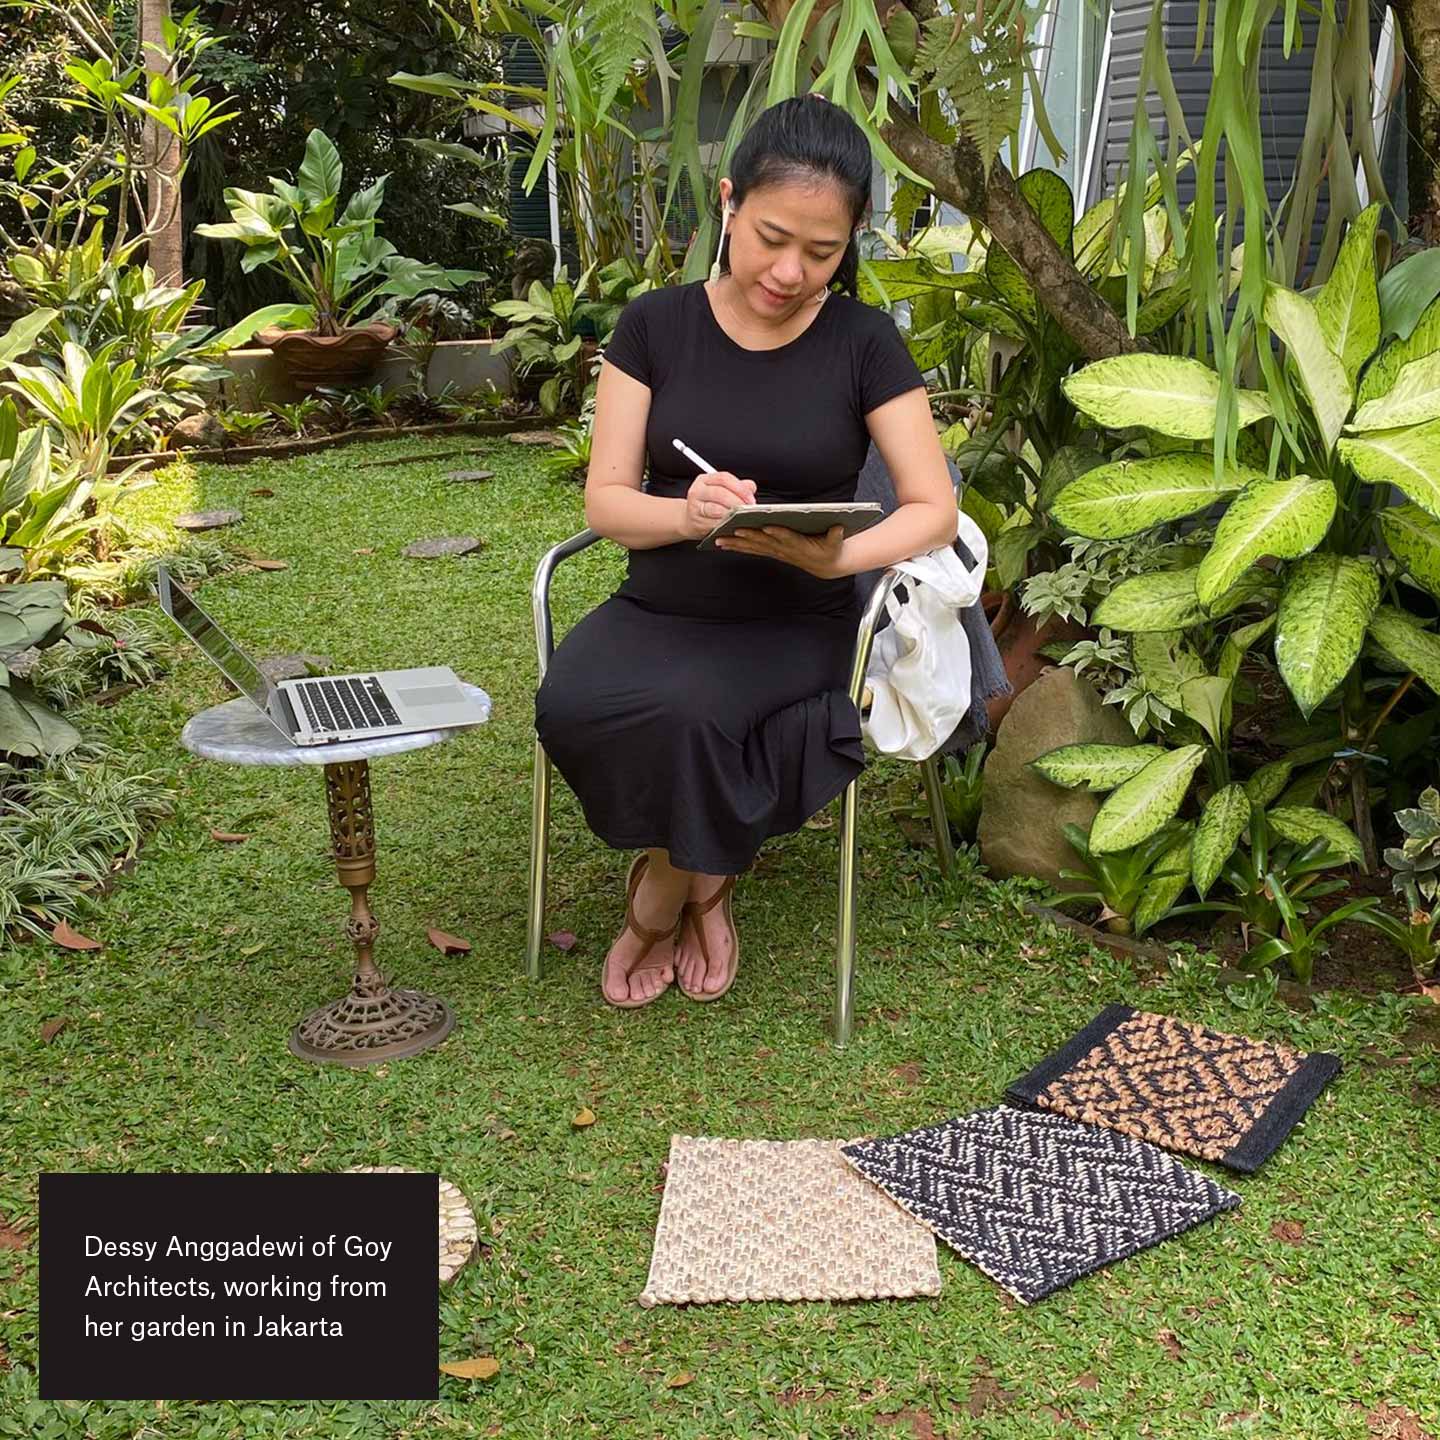 Dessy Anggadewi van Goy Architects, aan het werk vanuit haar tuin in Jakarta